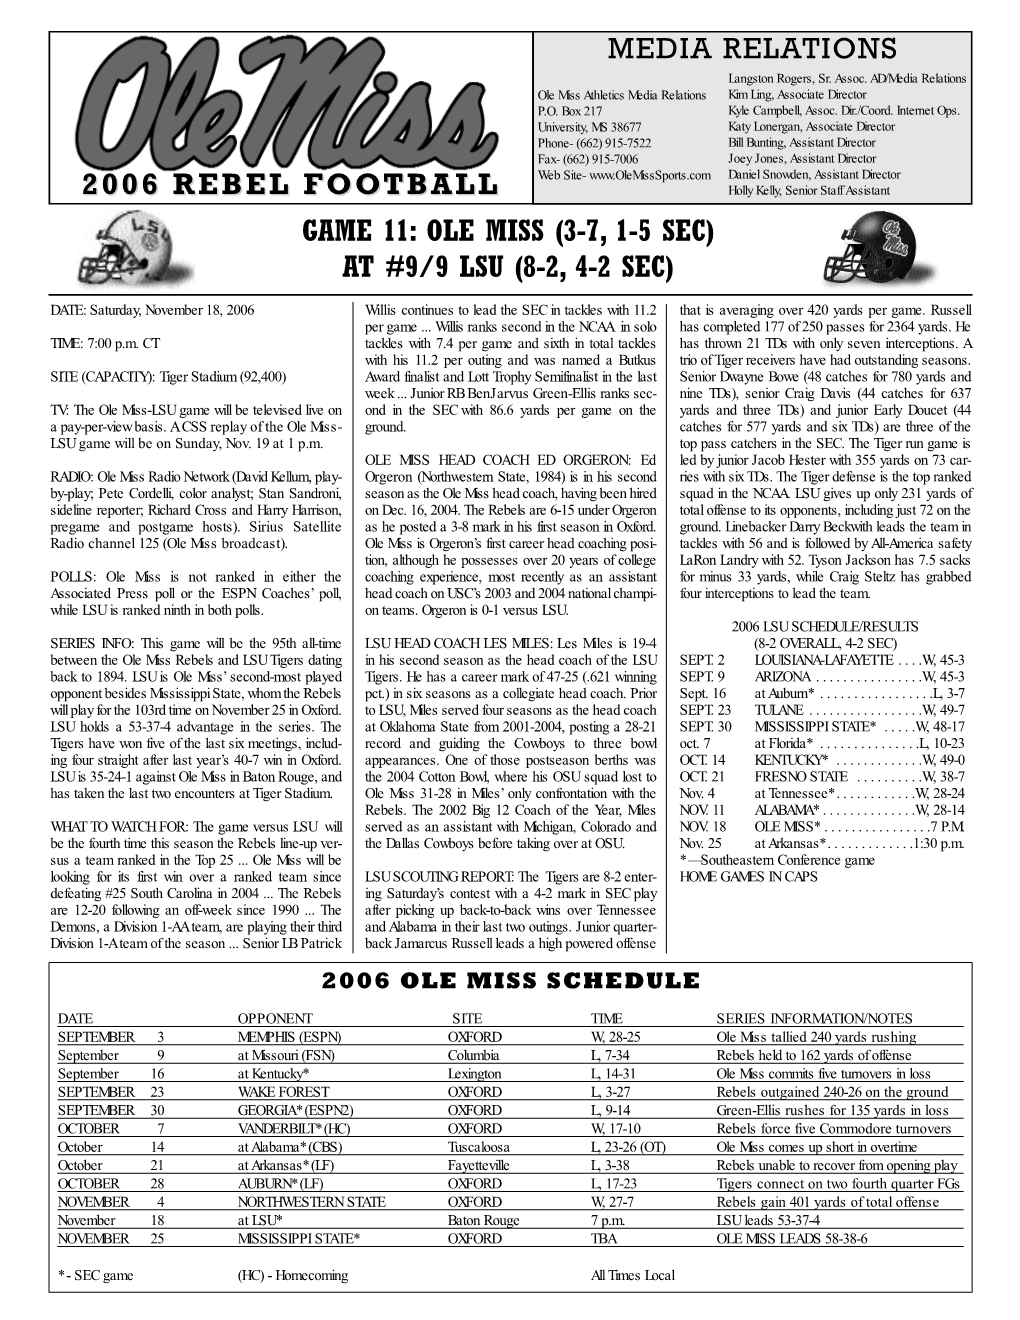 Media Relations Game 11: Ole Miss (3-7, 1-5 Sec) at #9/9 Lsu (8-2, 4-2 Sec) 2006 Rebel Football